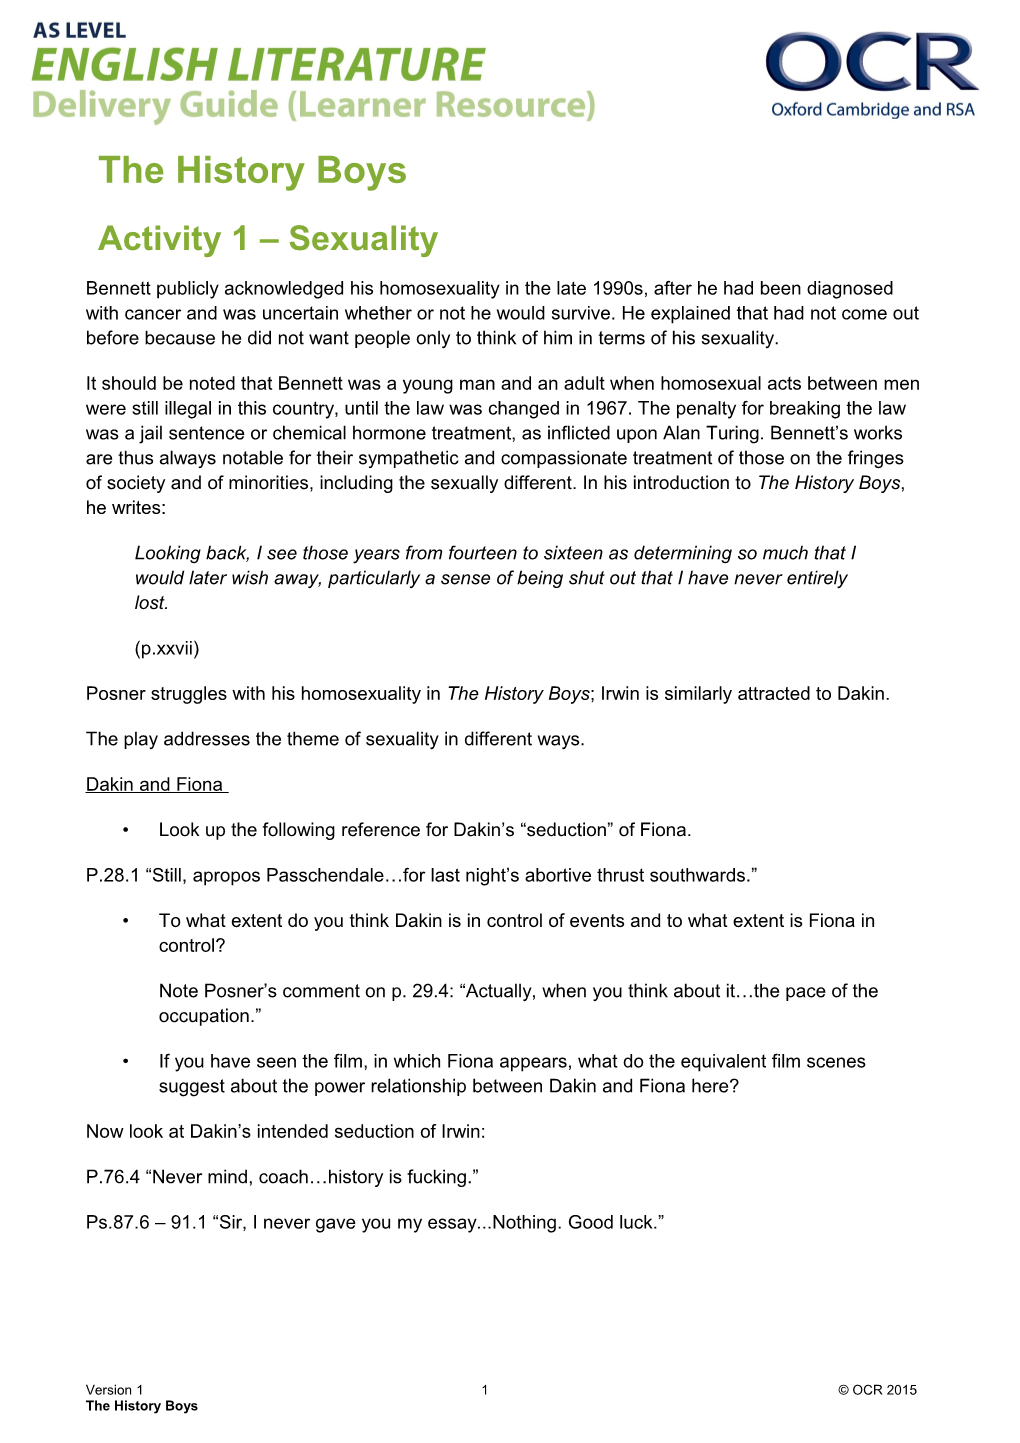 OCR AS Level English Literature - the History Boys - Activity 1